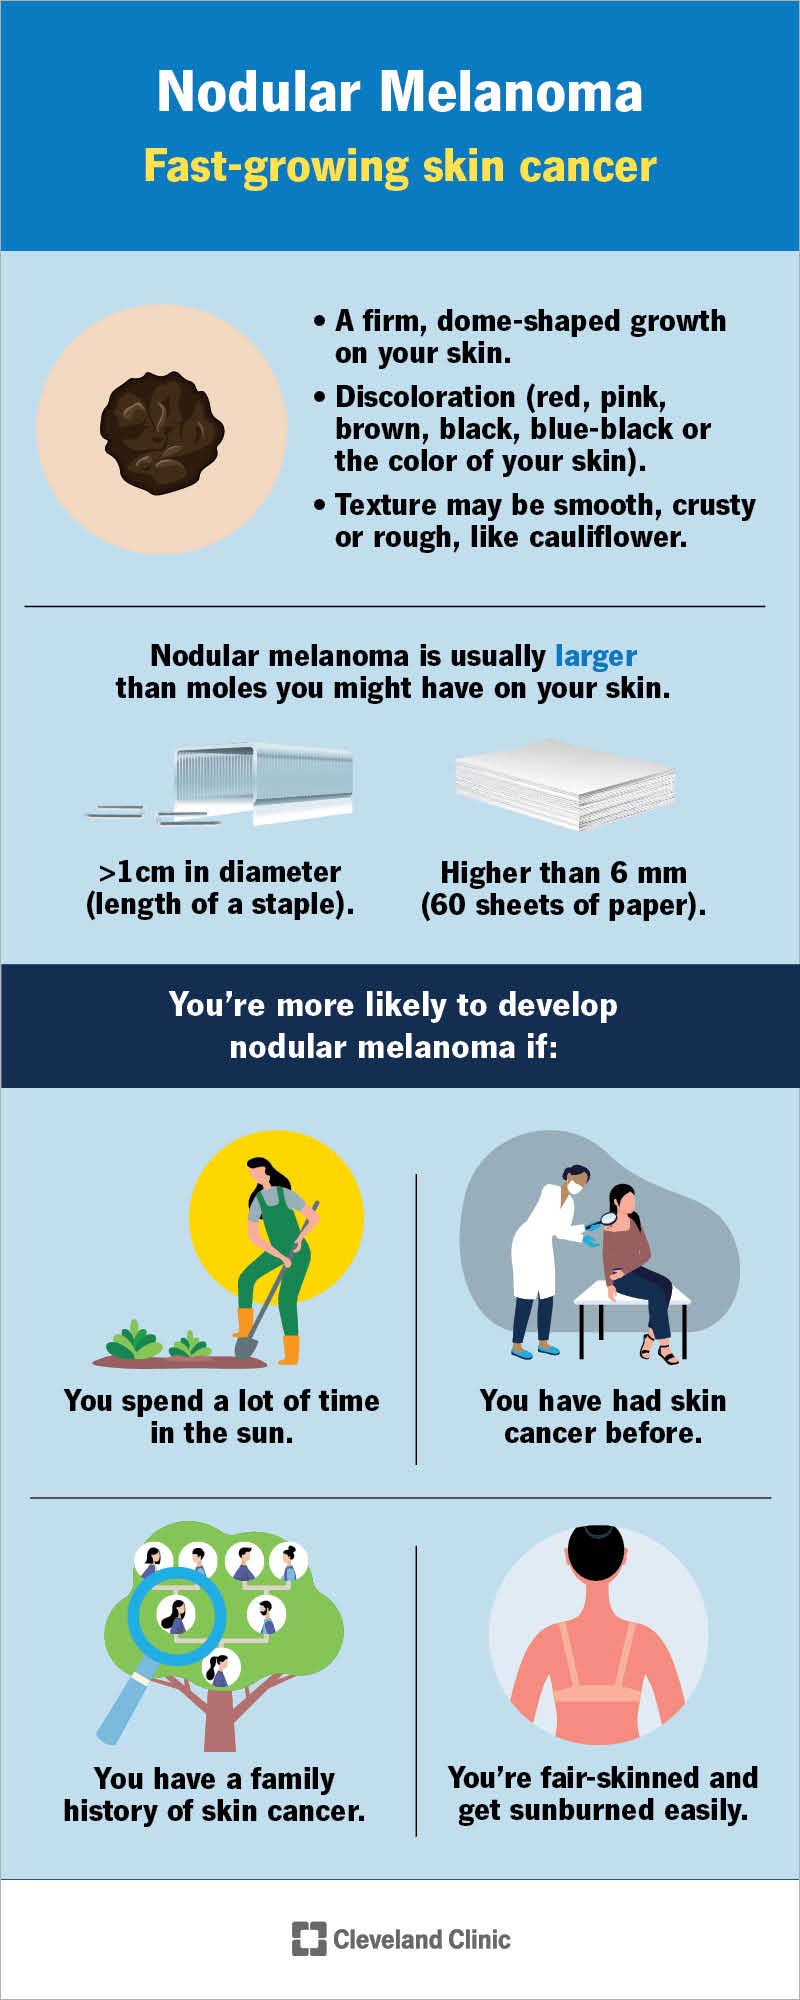 A chart describing nodular melanoma characteristics and those who are most likely to get nodular melanoma.